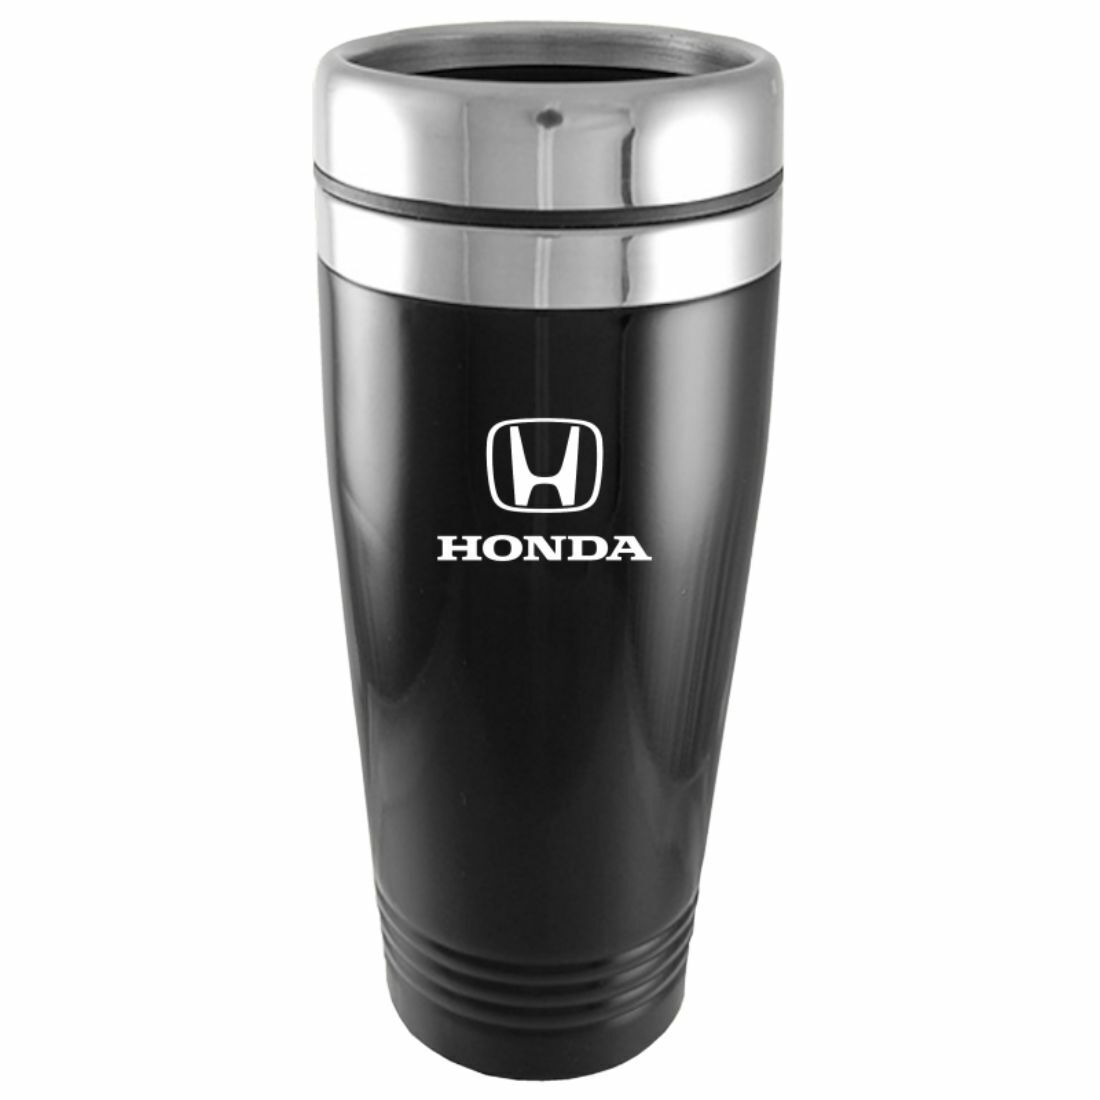 Honda Stainless Steel Tumbler Vacuum Insulated Travel Coffee Mug - Black